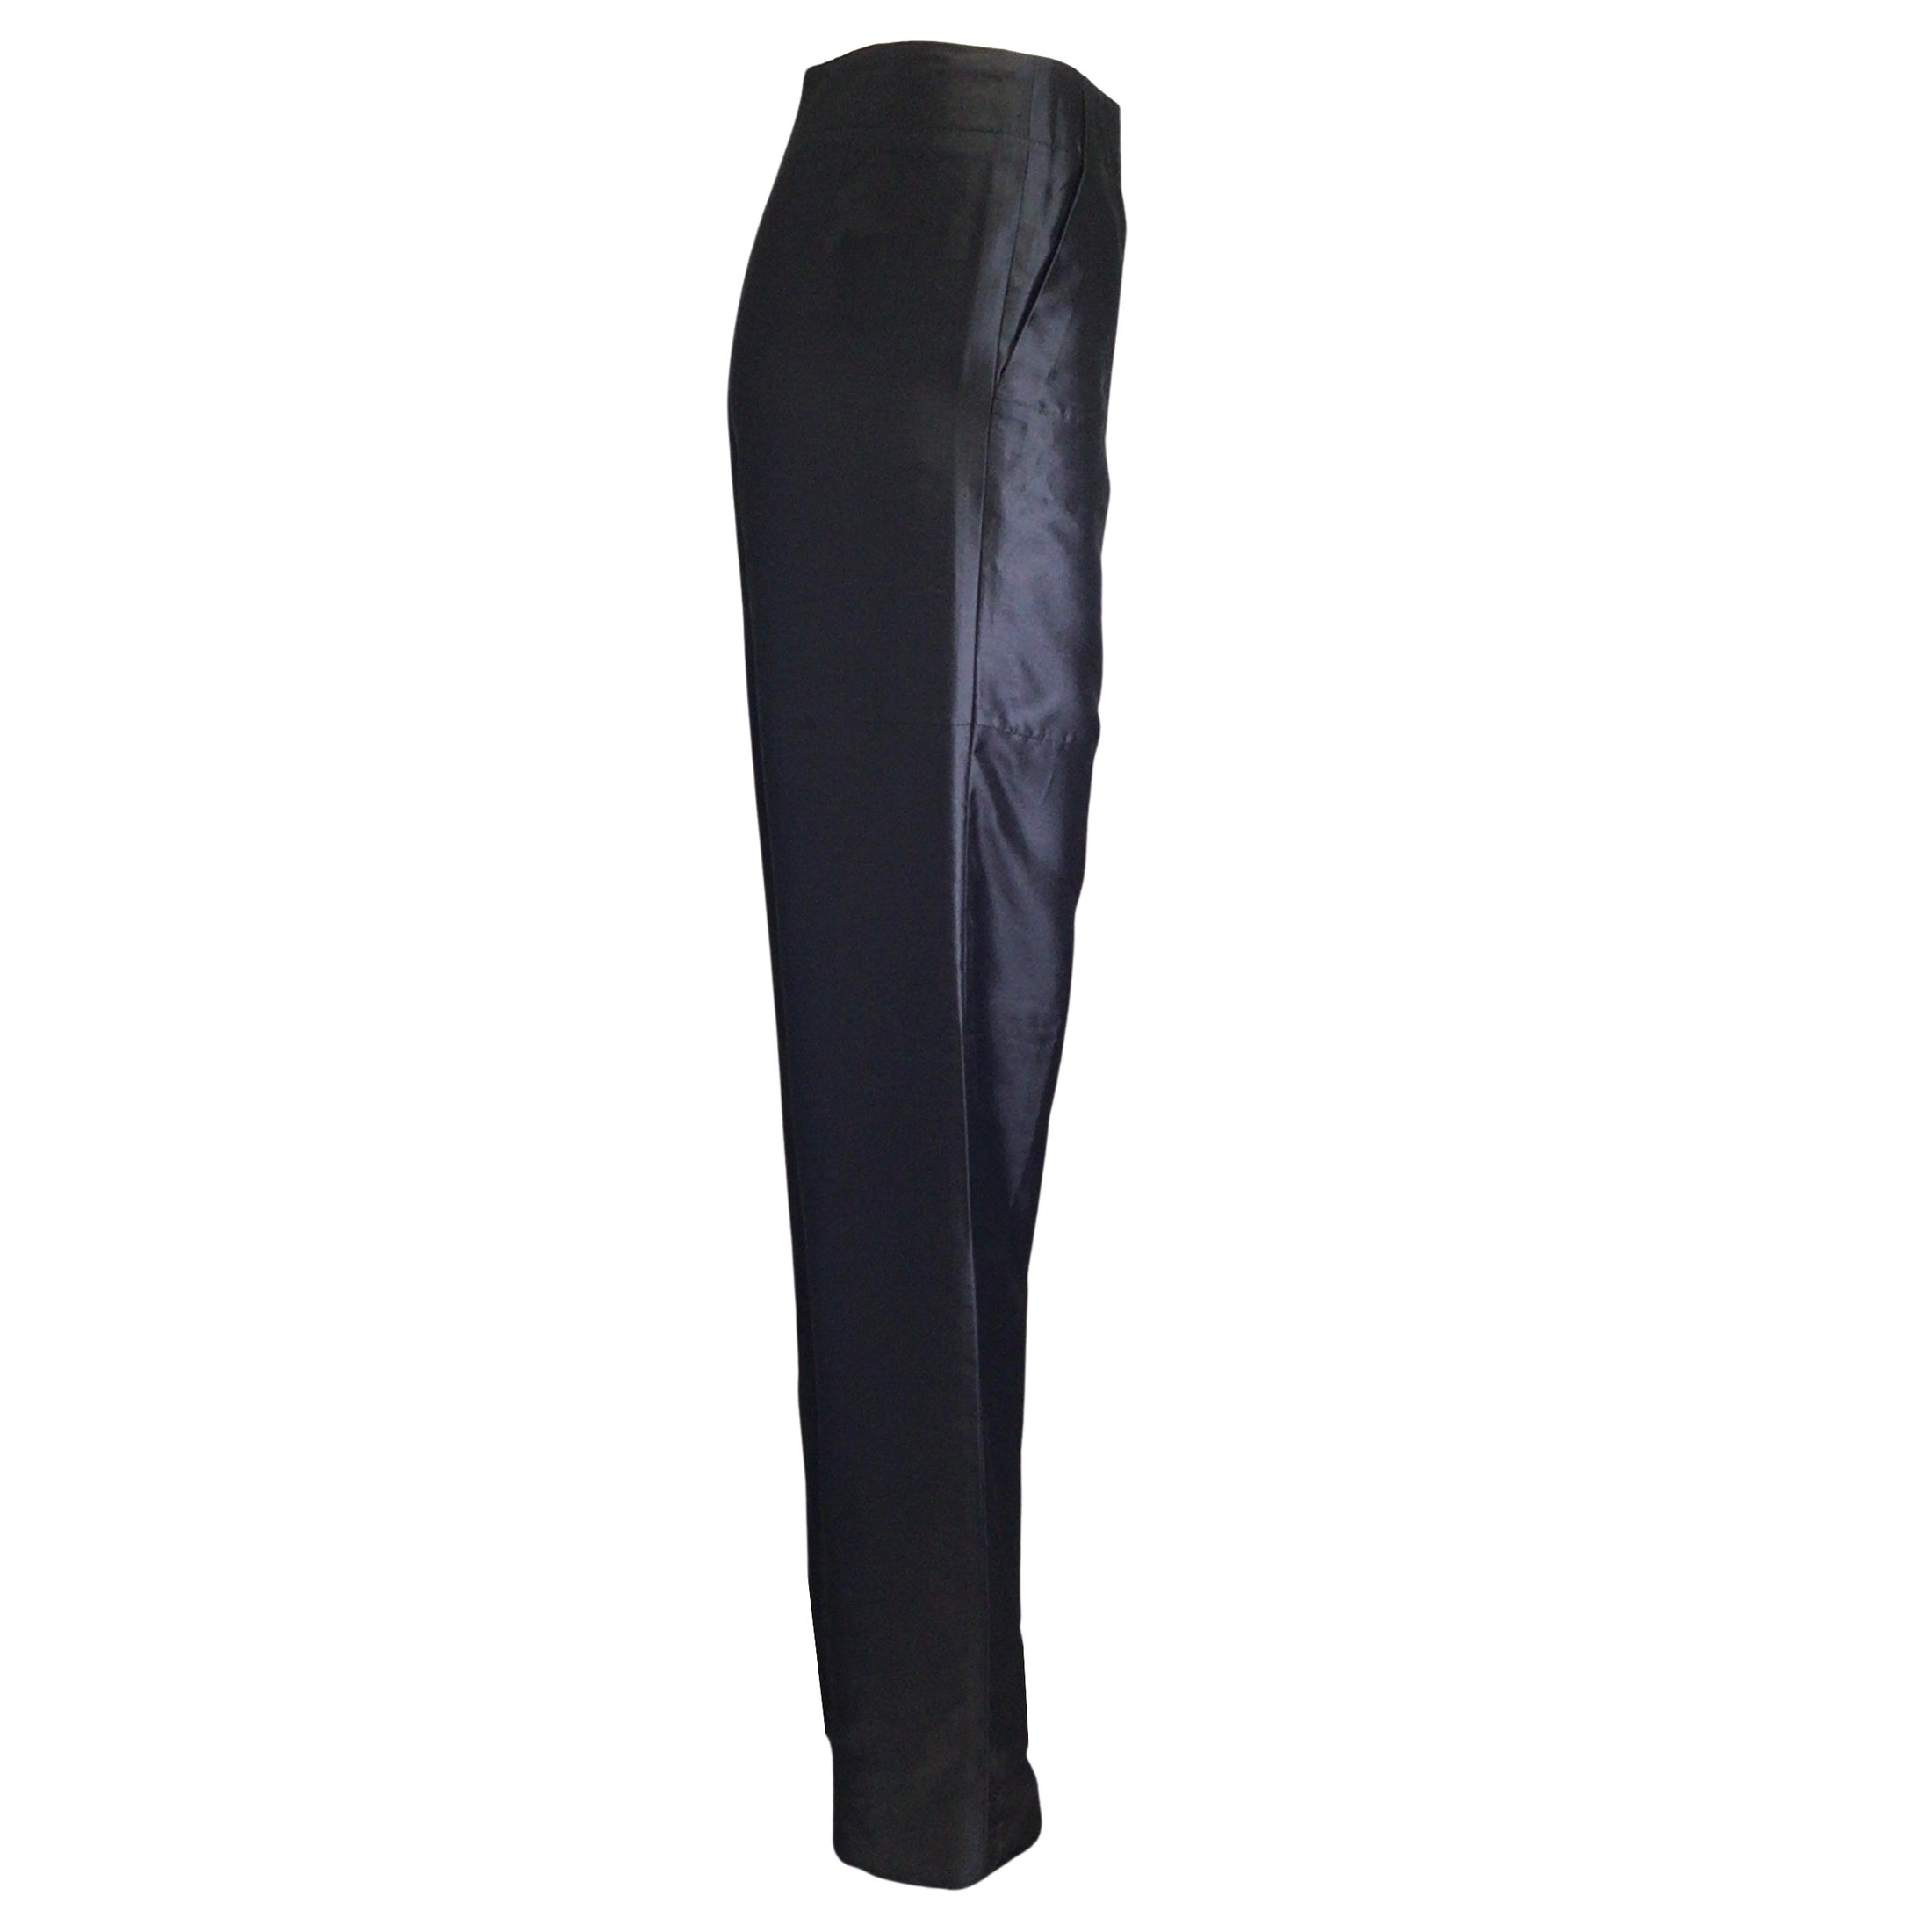 Giorgio Armani Black Silk Trousers / Pants